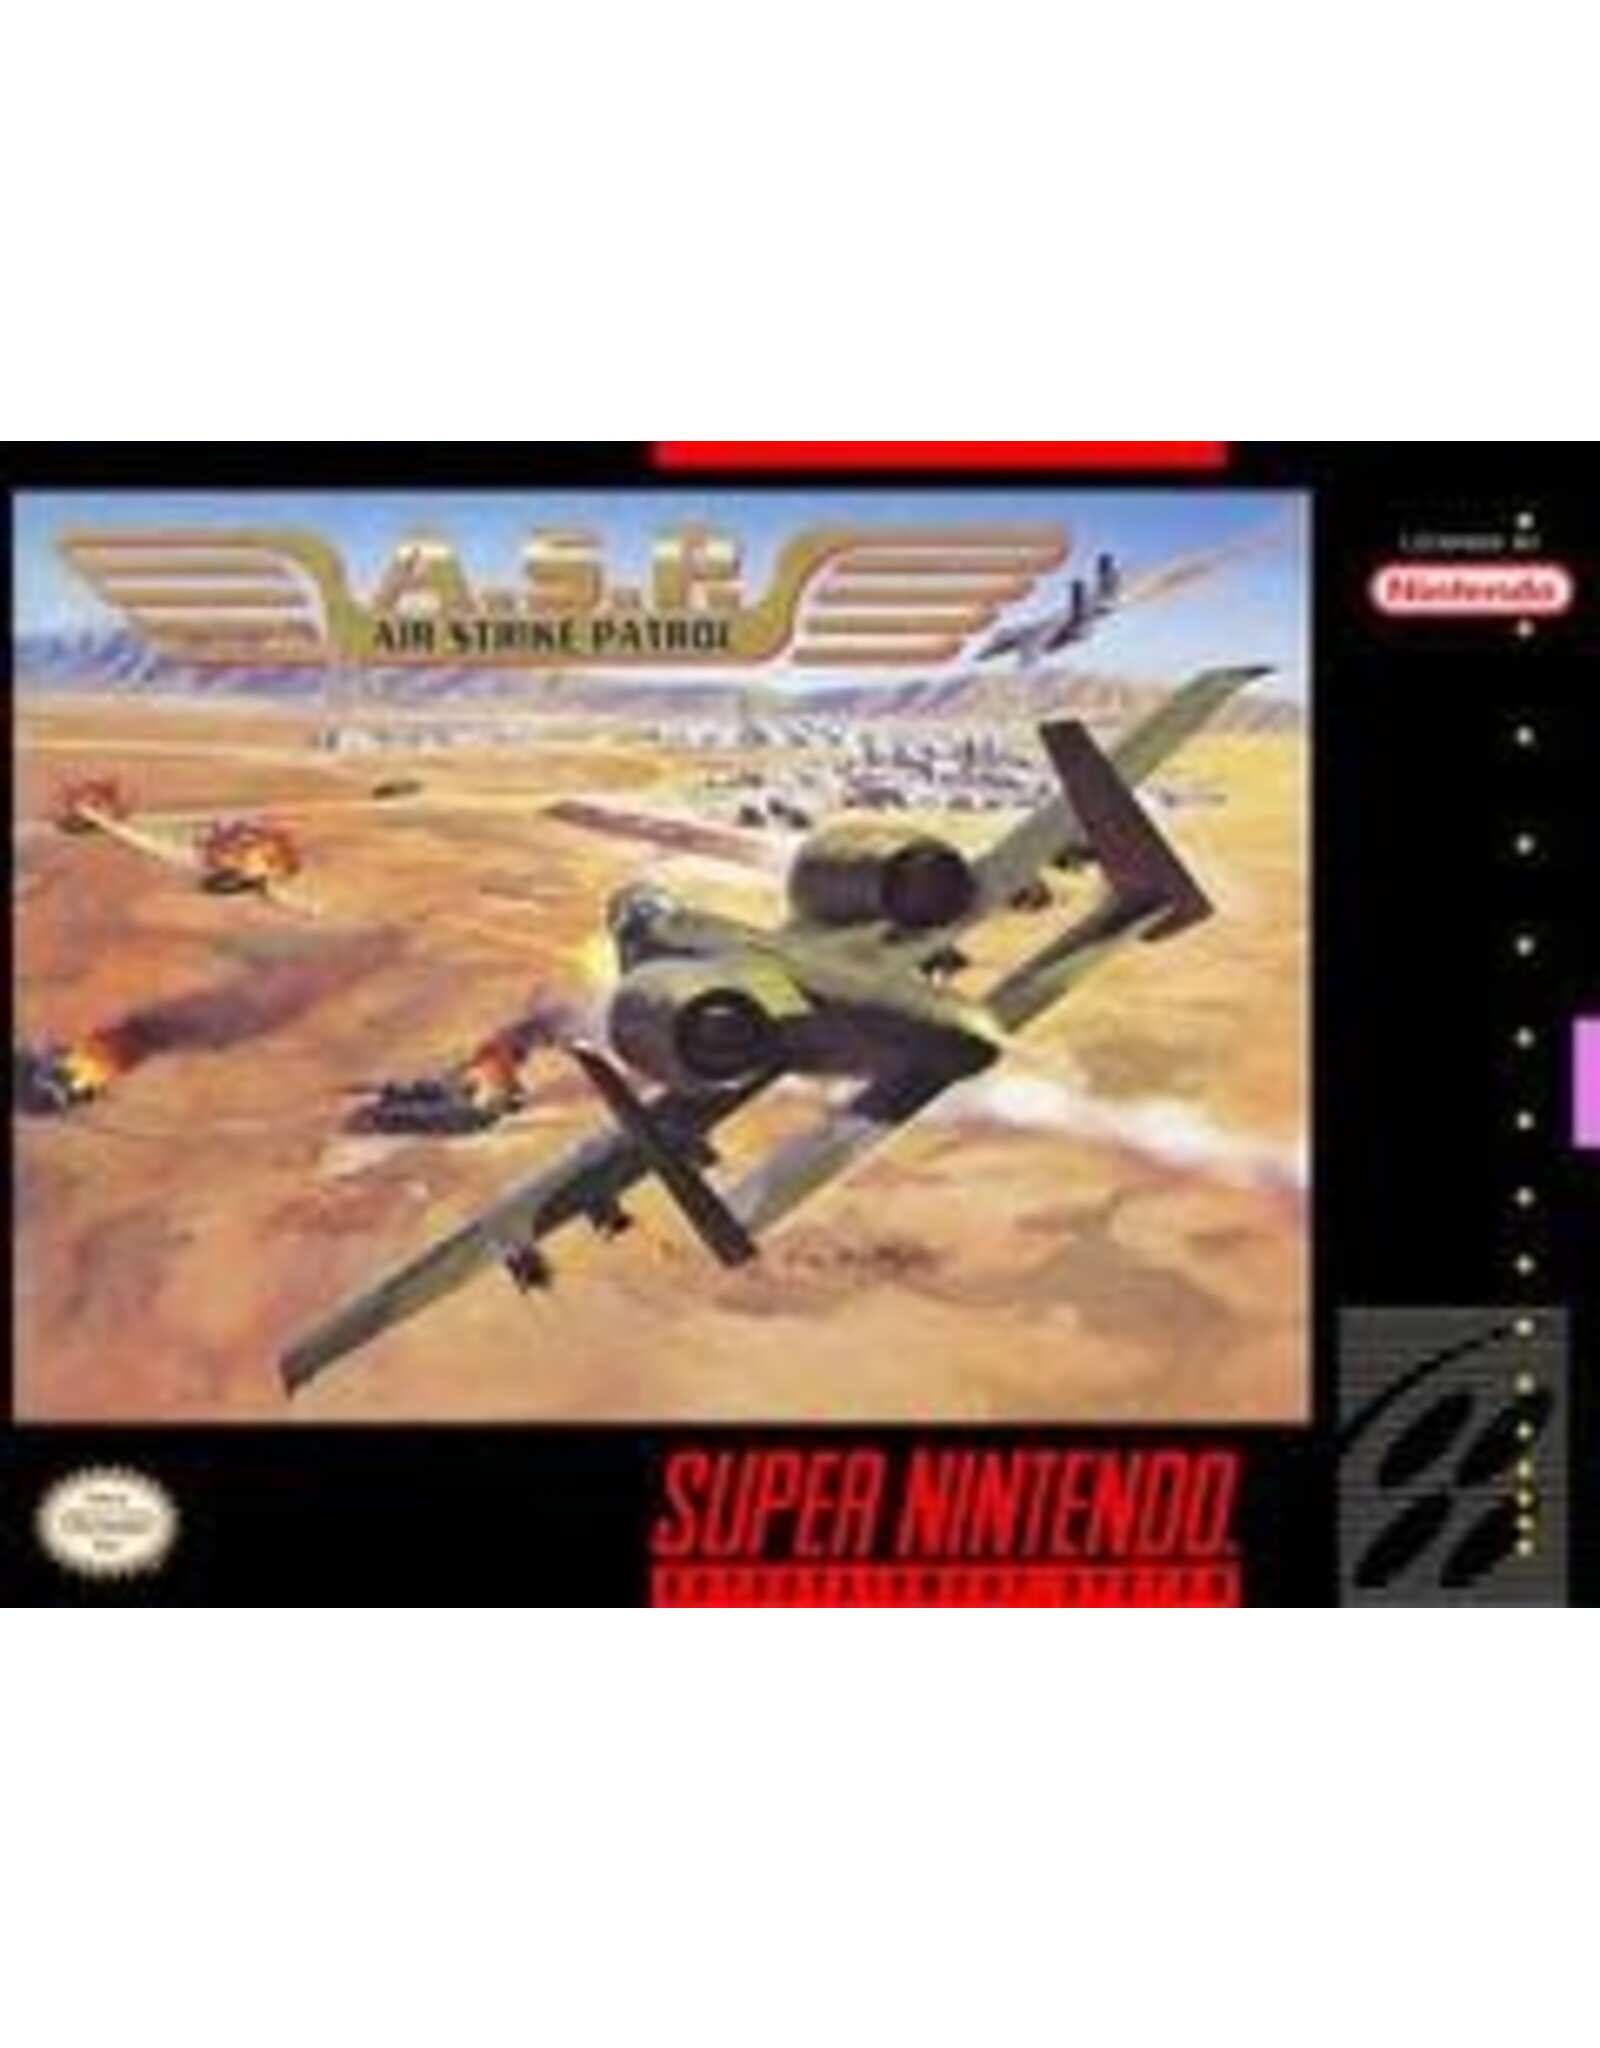 Super Nintendo A.S.P. Air Strike Patrol (CiB, Damaged Manual)